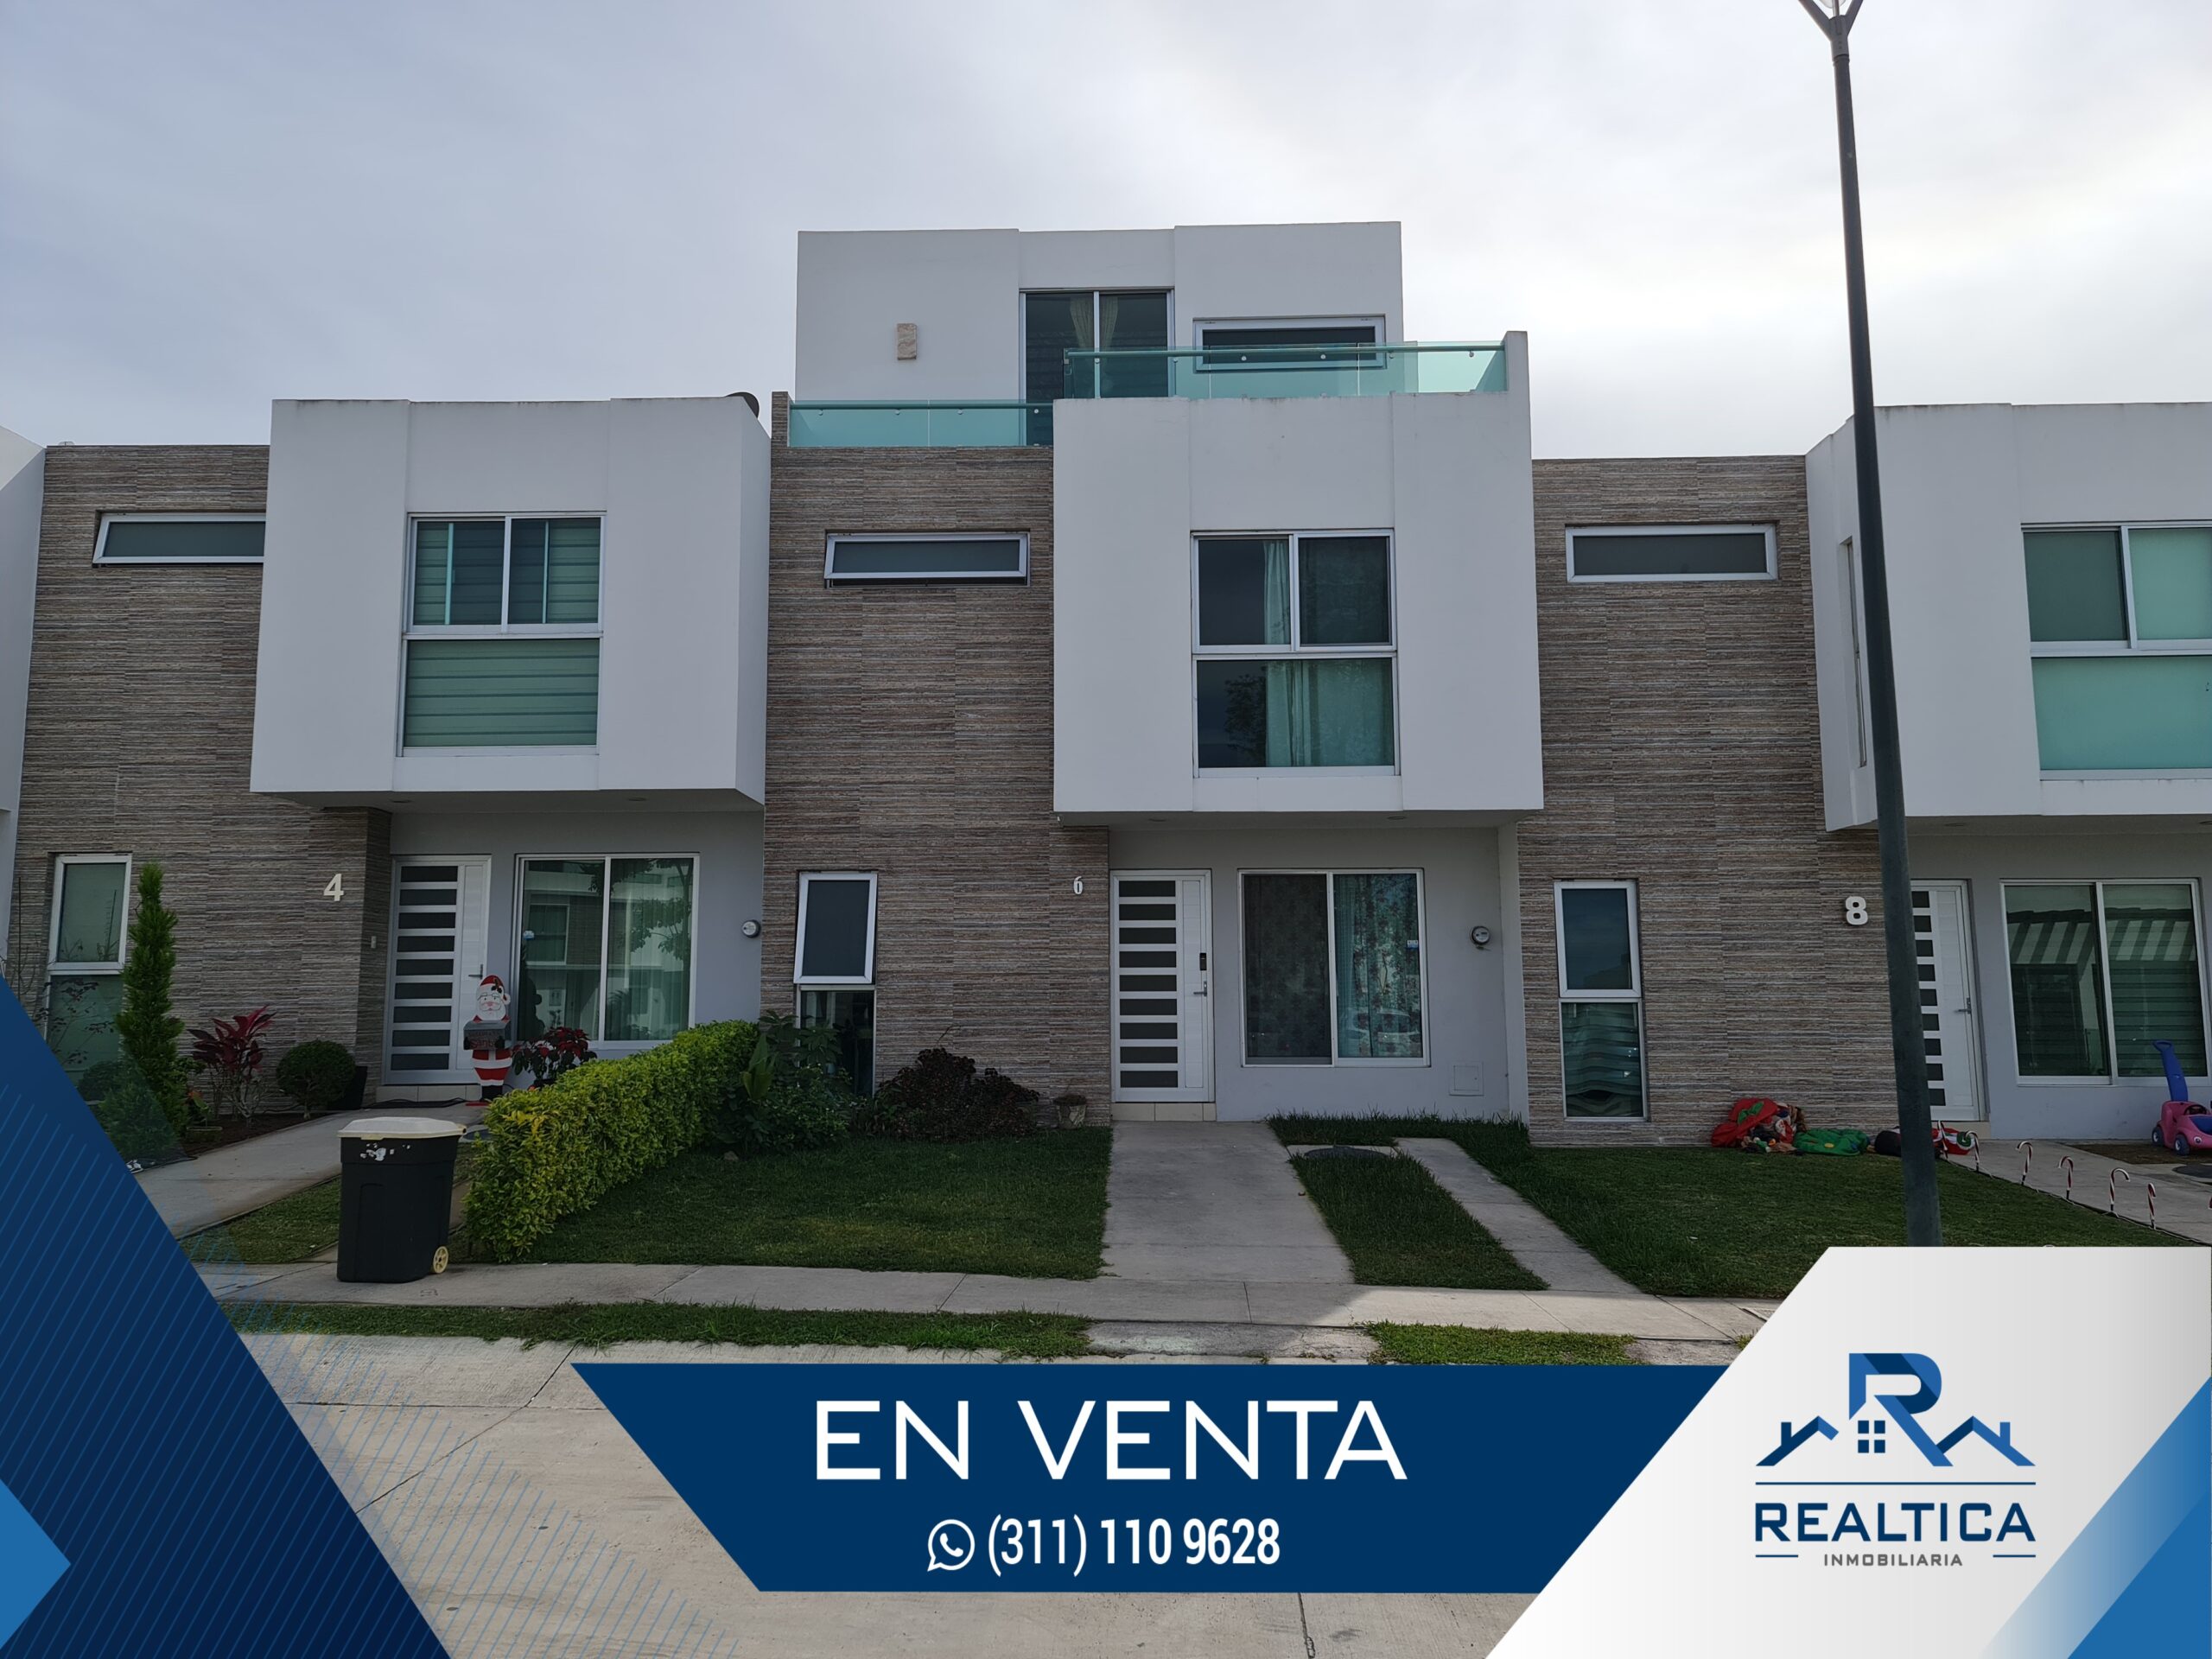 Realtica – Casa en Venta, Bonaterra Frente a casa Club